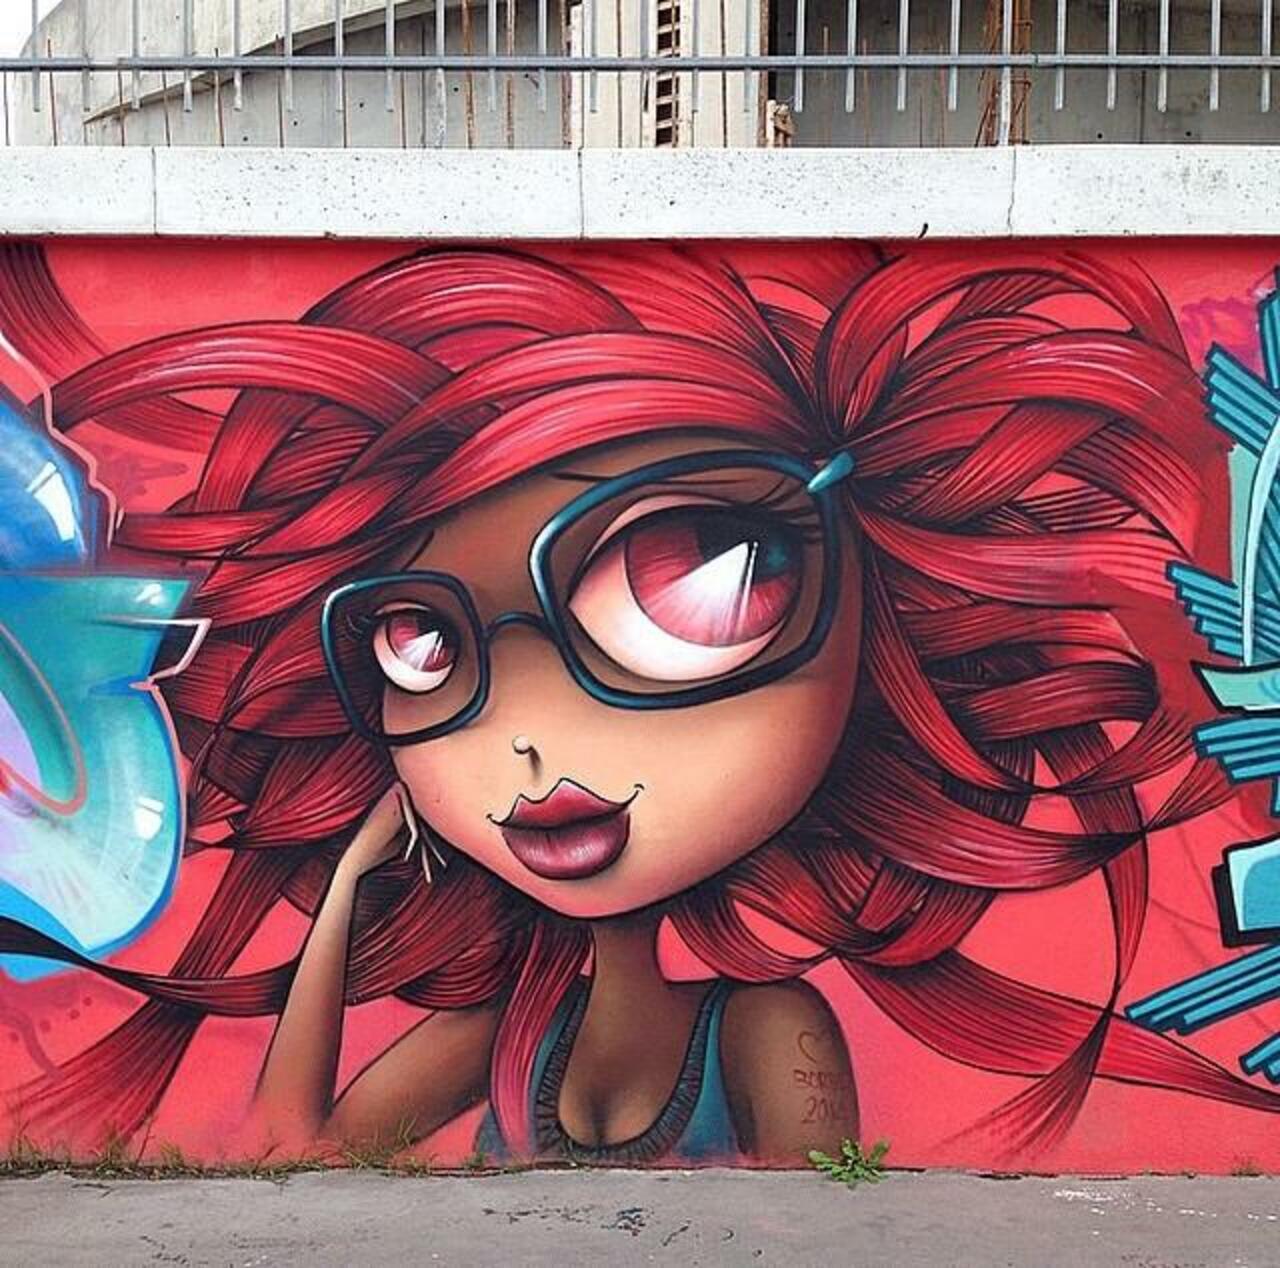 RT "@GoogleStreetArt: Wonderful Street Art mural by @VinieGraffiti

#art #graffiti #streetart http://t.co/RKR2H3Kgen"